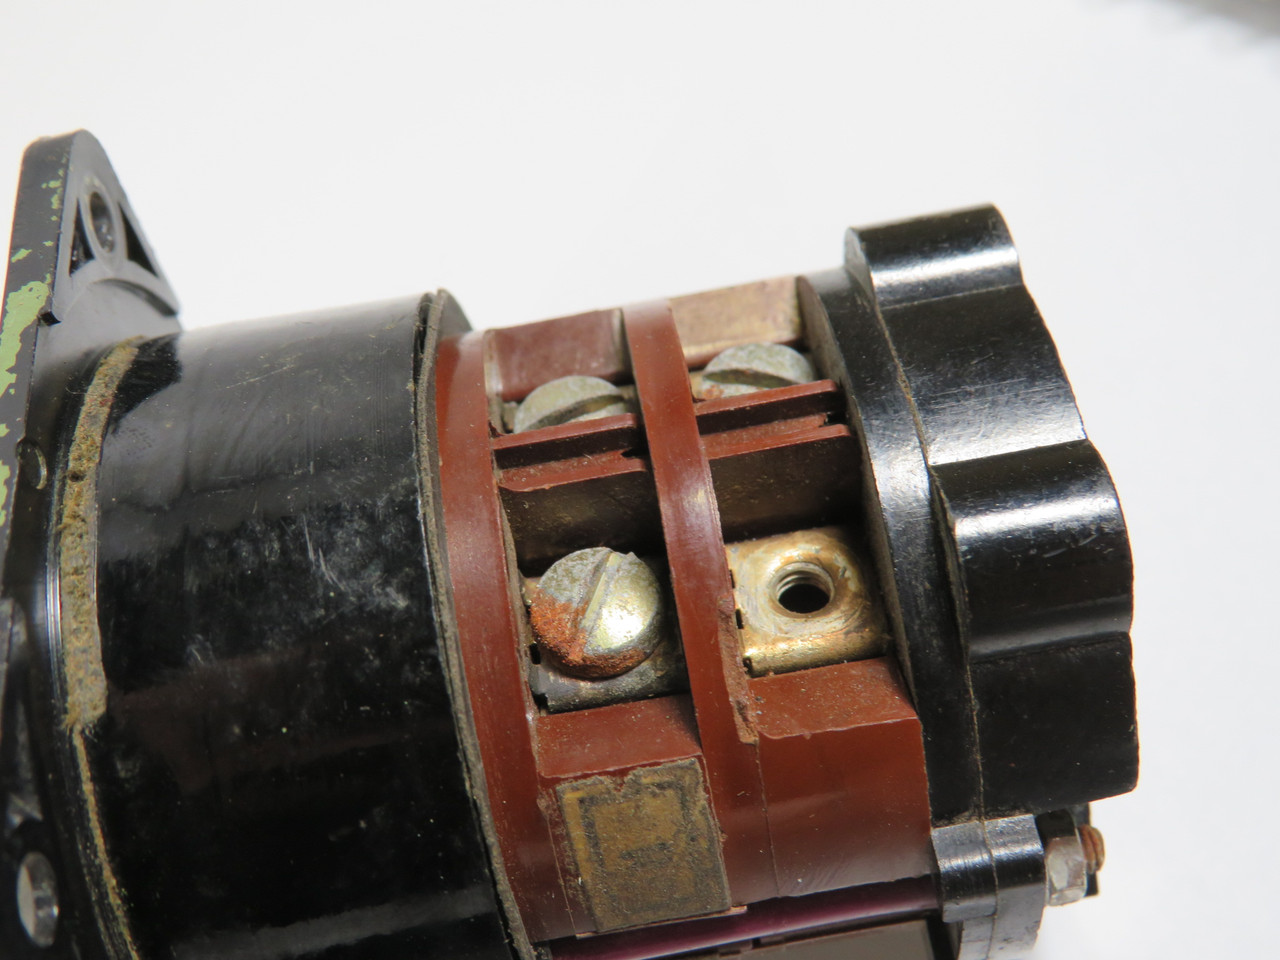 Klockner-Moeller T2B-2 Rotary Switch MISSING SCREW/COSMETIC DAMAGE USED